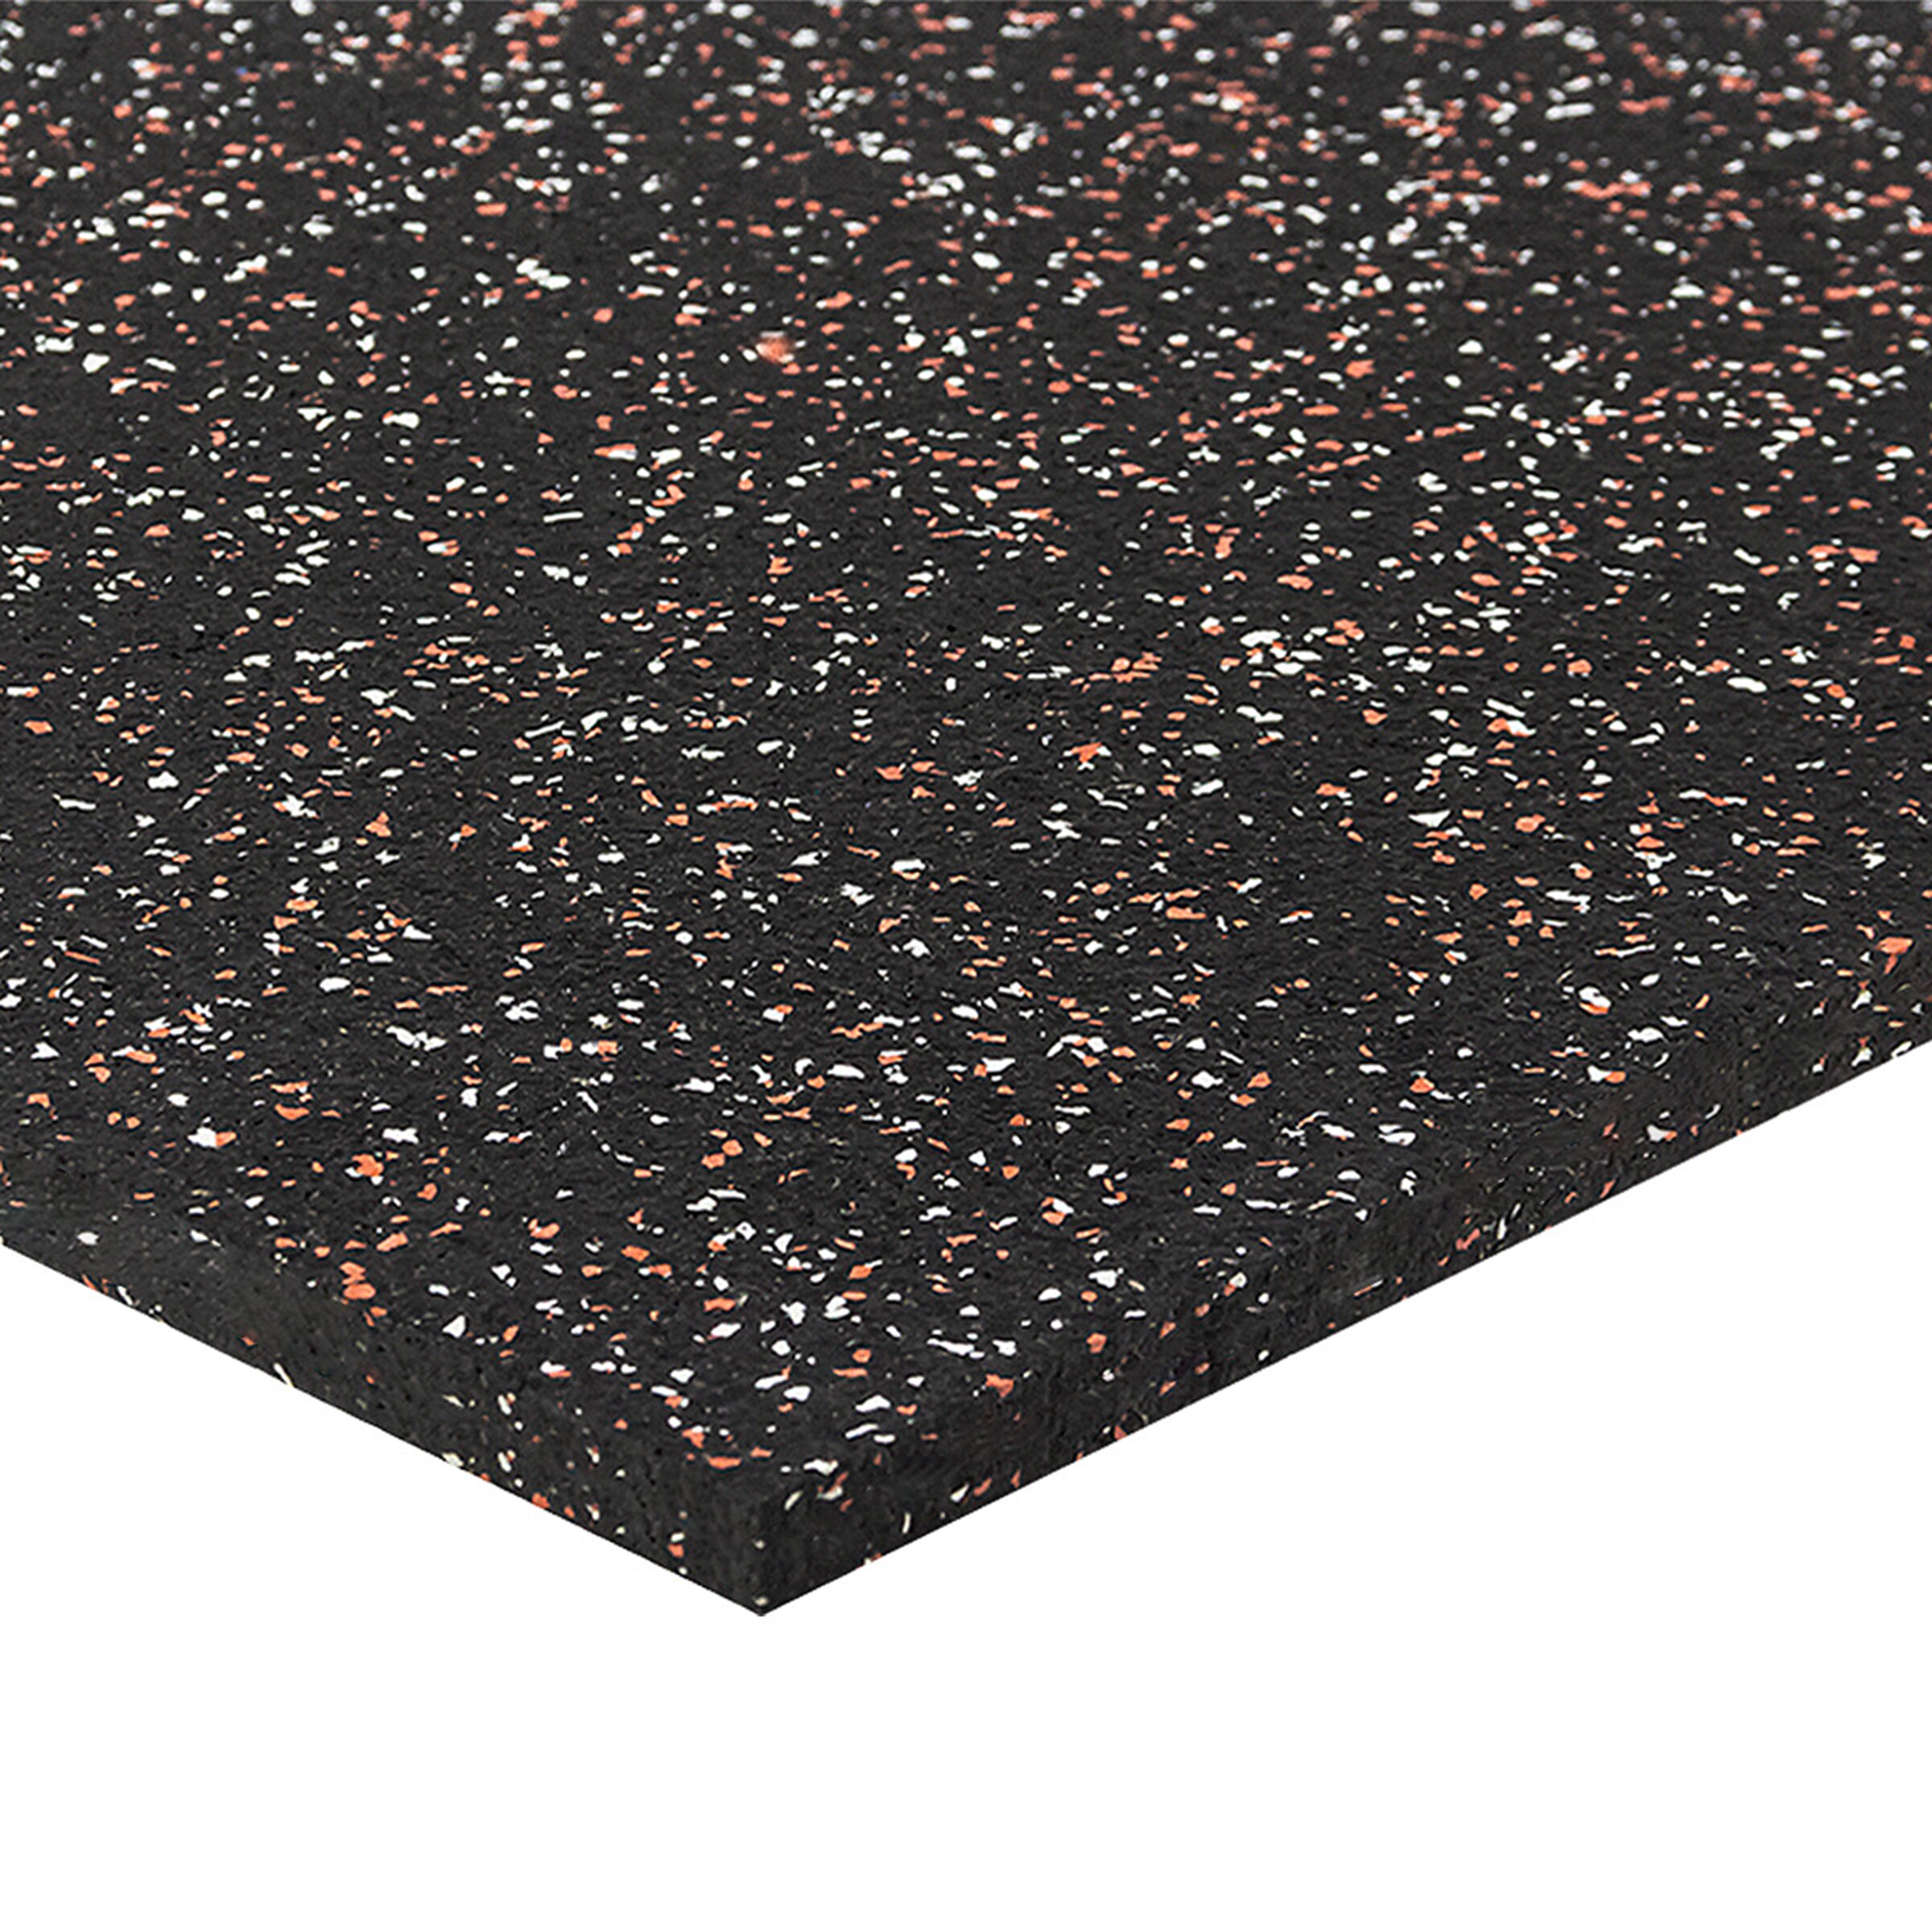 Černo-bílo-červená podlahová guma (puzzle - střed) FLOMA FitFlo SF1050 - délka 100 cm, šířka 100 cm, výška 1,6 cm